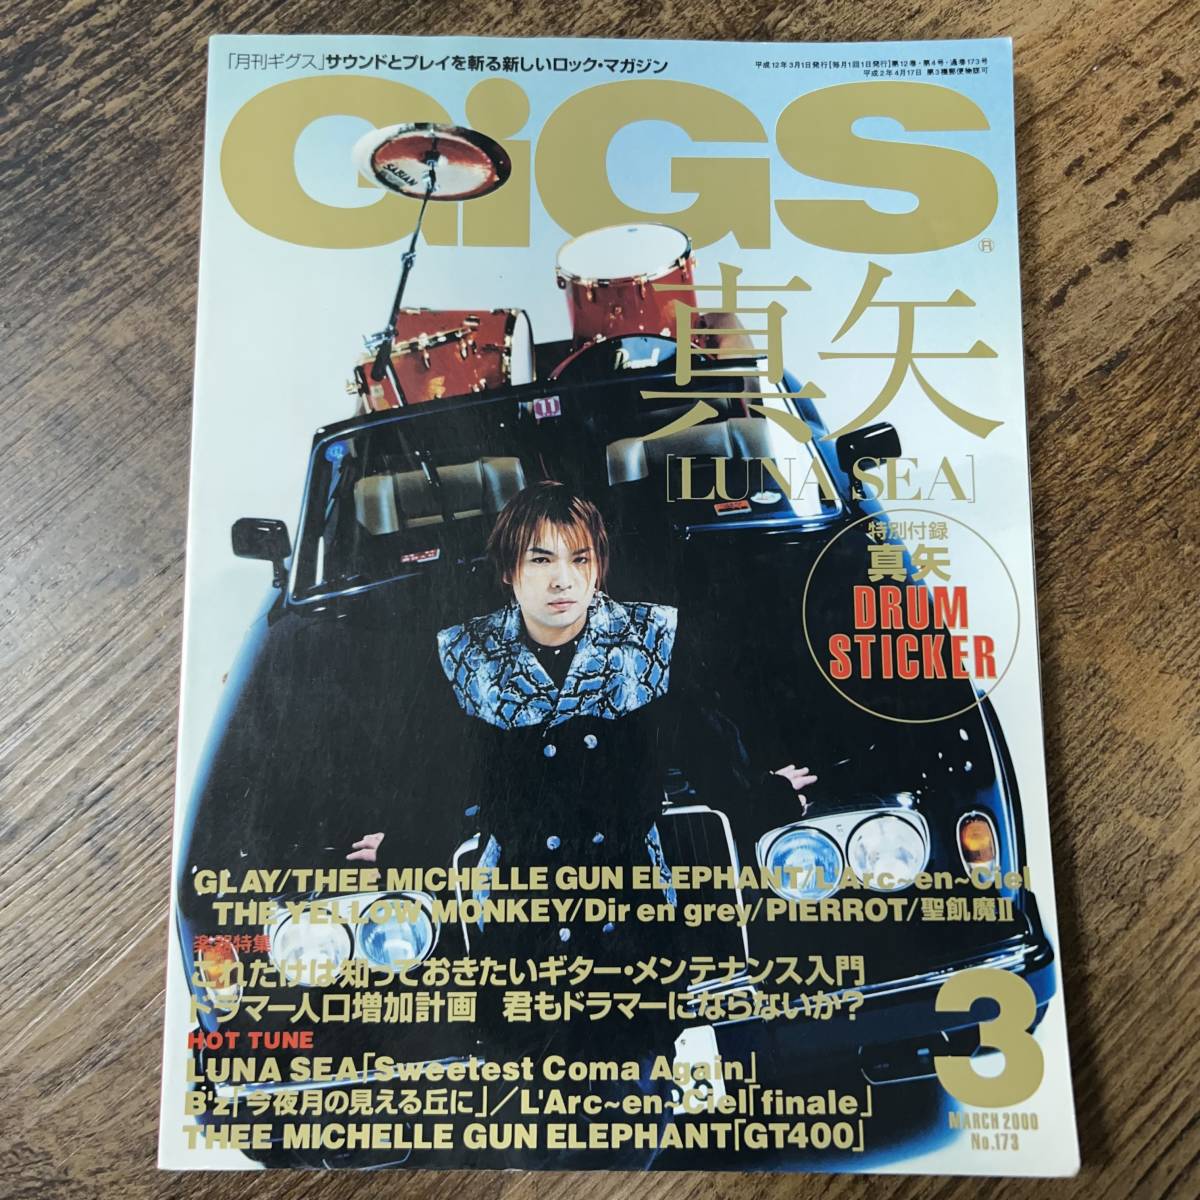 K-563■月刊ギグス GiGS 2000年3月1日号■真矢 LUNA SEA■シンコーミュージック■_画像1